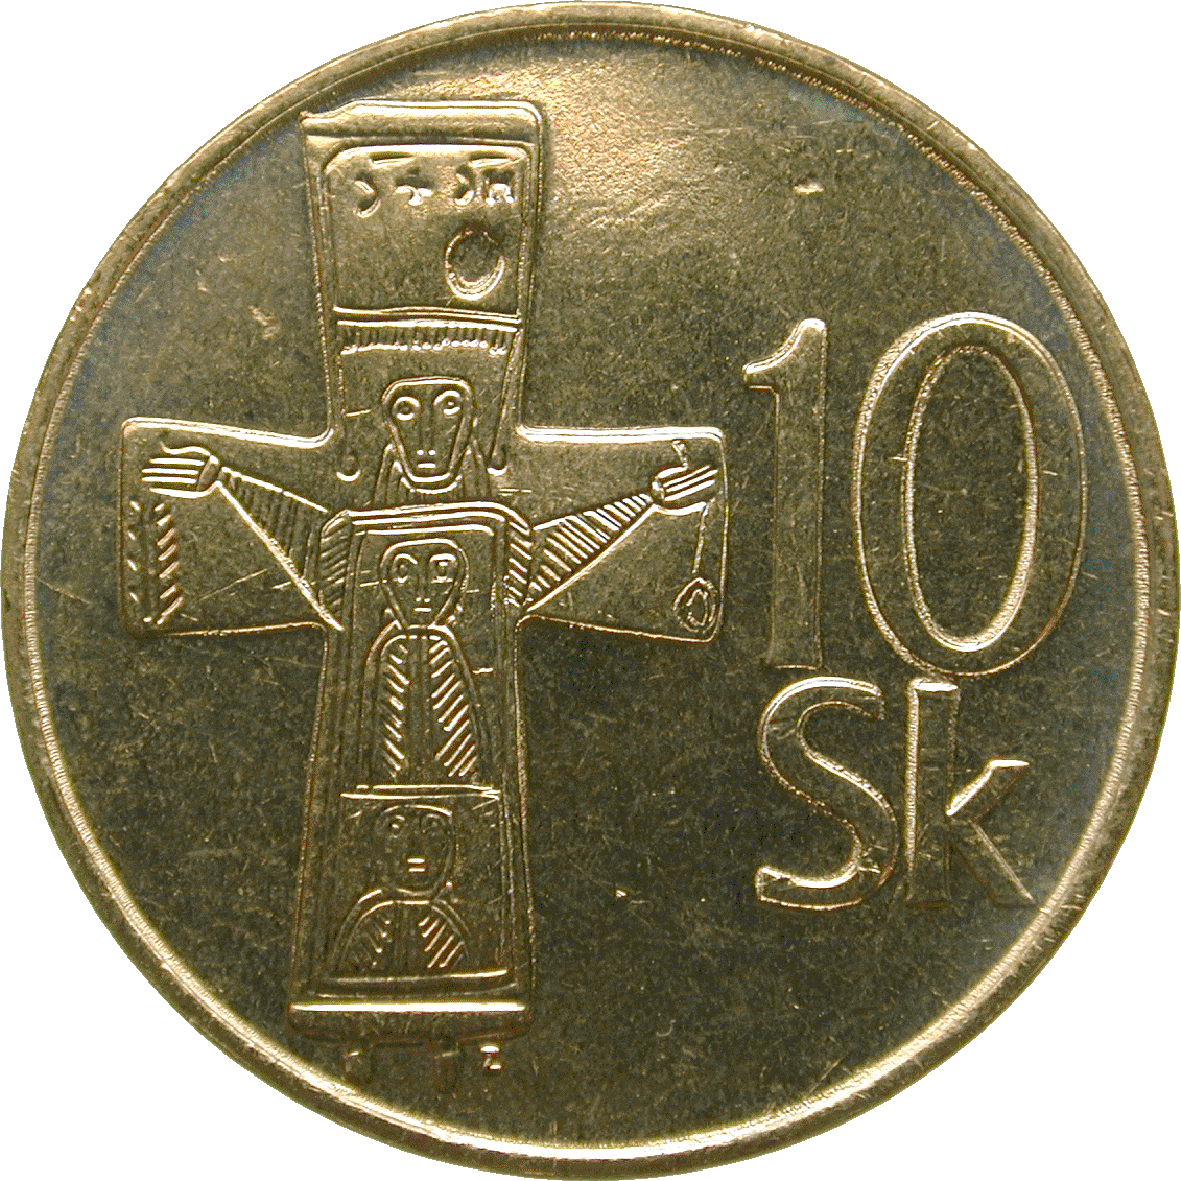 Slovak Republic, 10 Koruna 2003 (reverse)